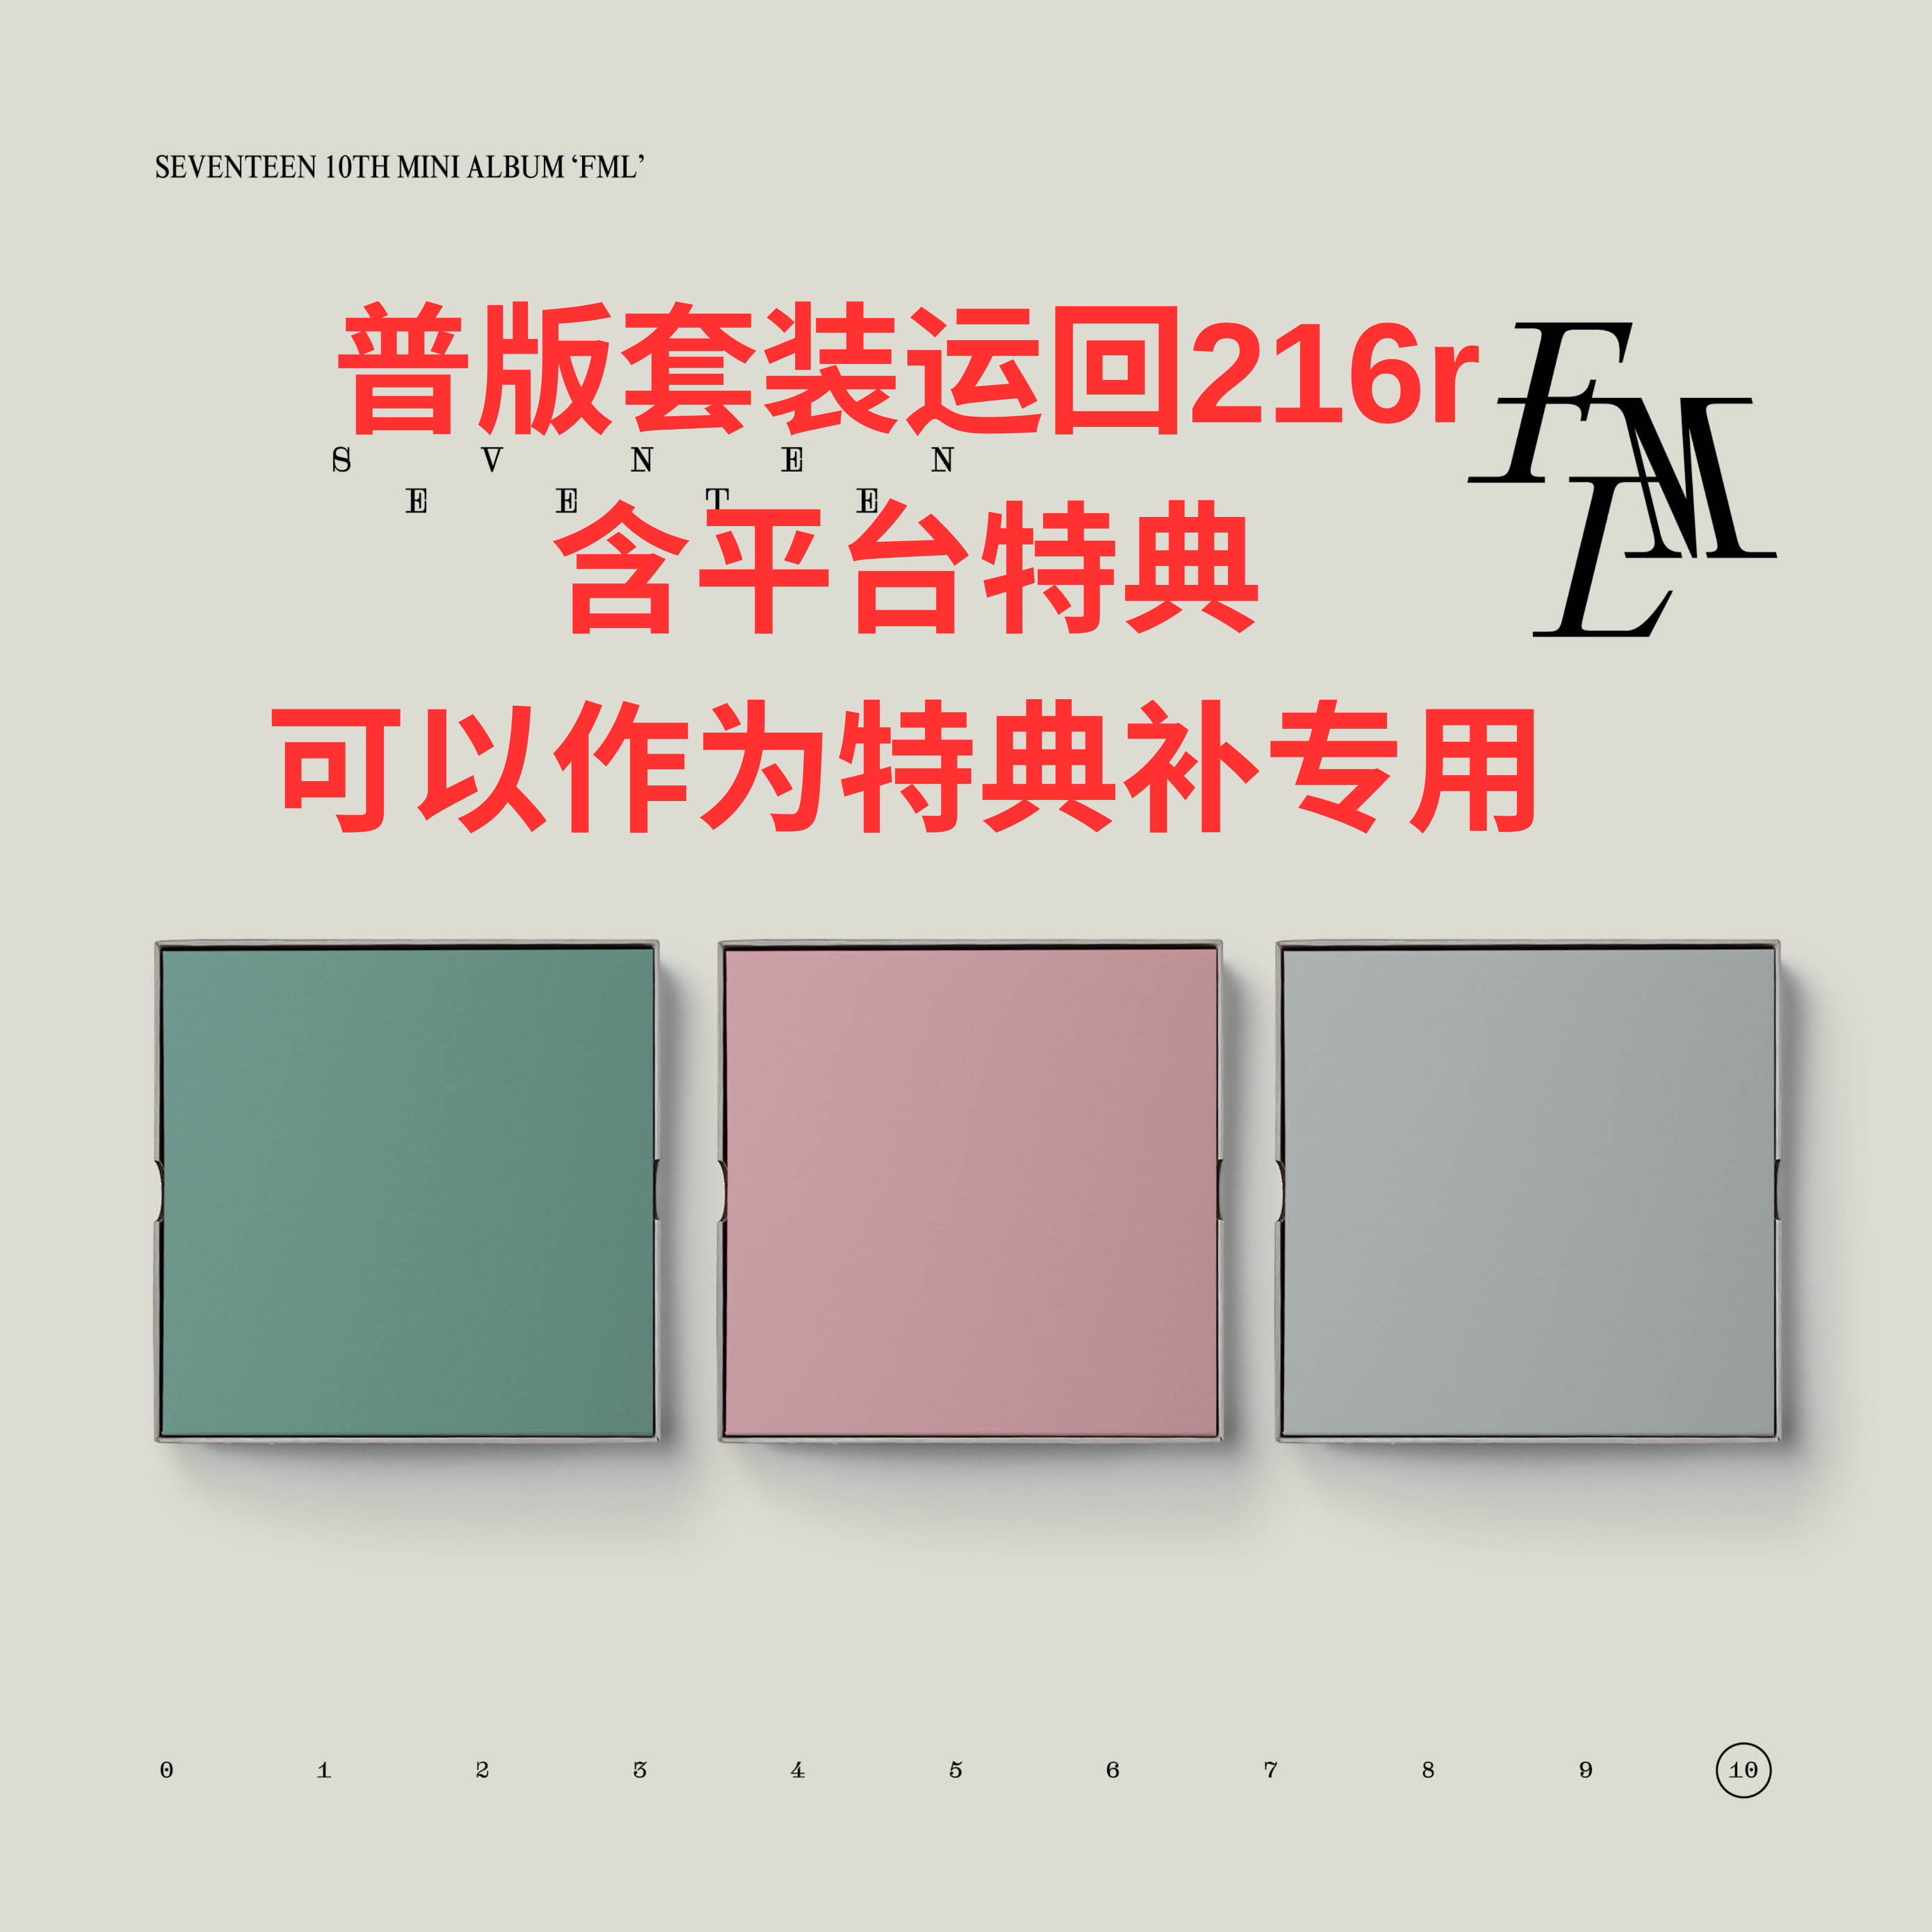 [全款 裸专] [Ktown4u Special Gift] [3CD 套装] SEVENTEEN - 迷你10辑 [FML] _徐明浩_The8Day记事馆